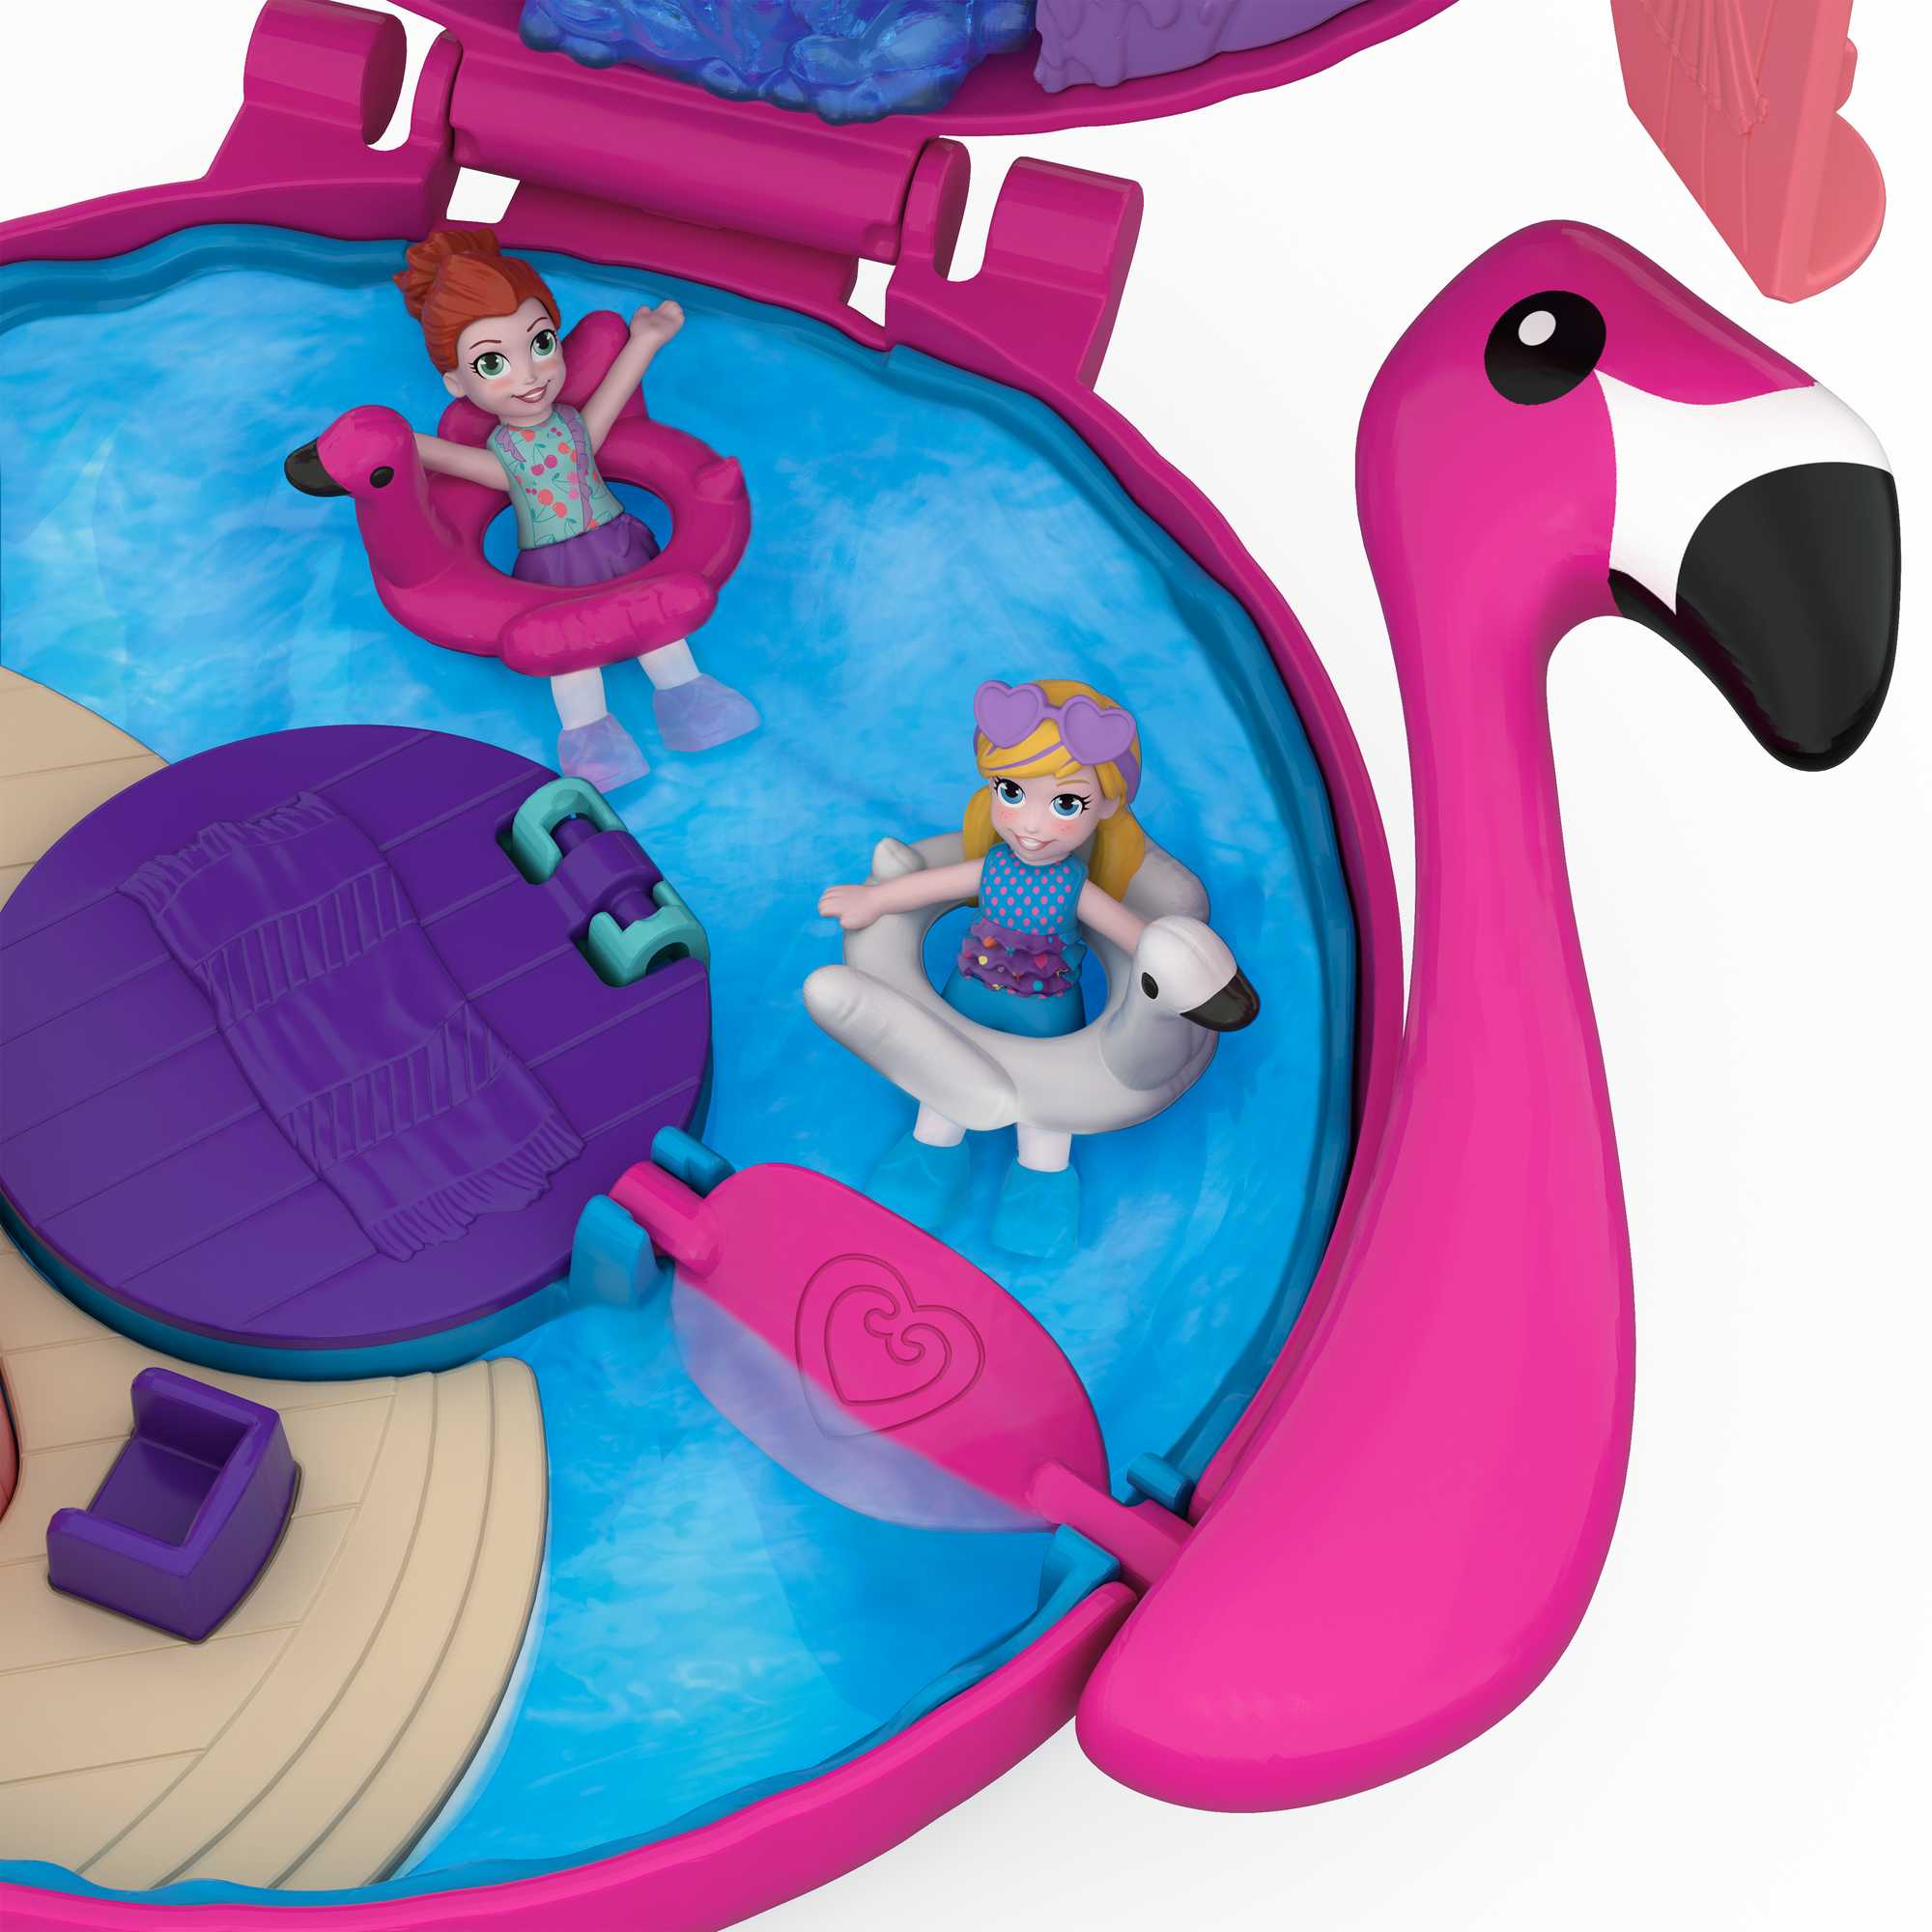 Freneszas flamingo de Polly Pocket  Polly Pocket Season 4: Summer of  Adventure 